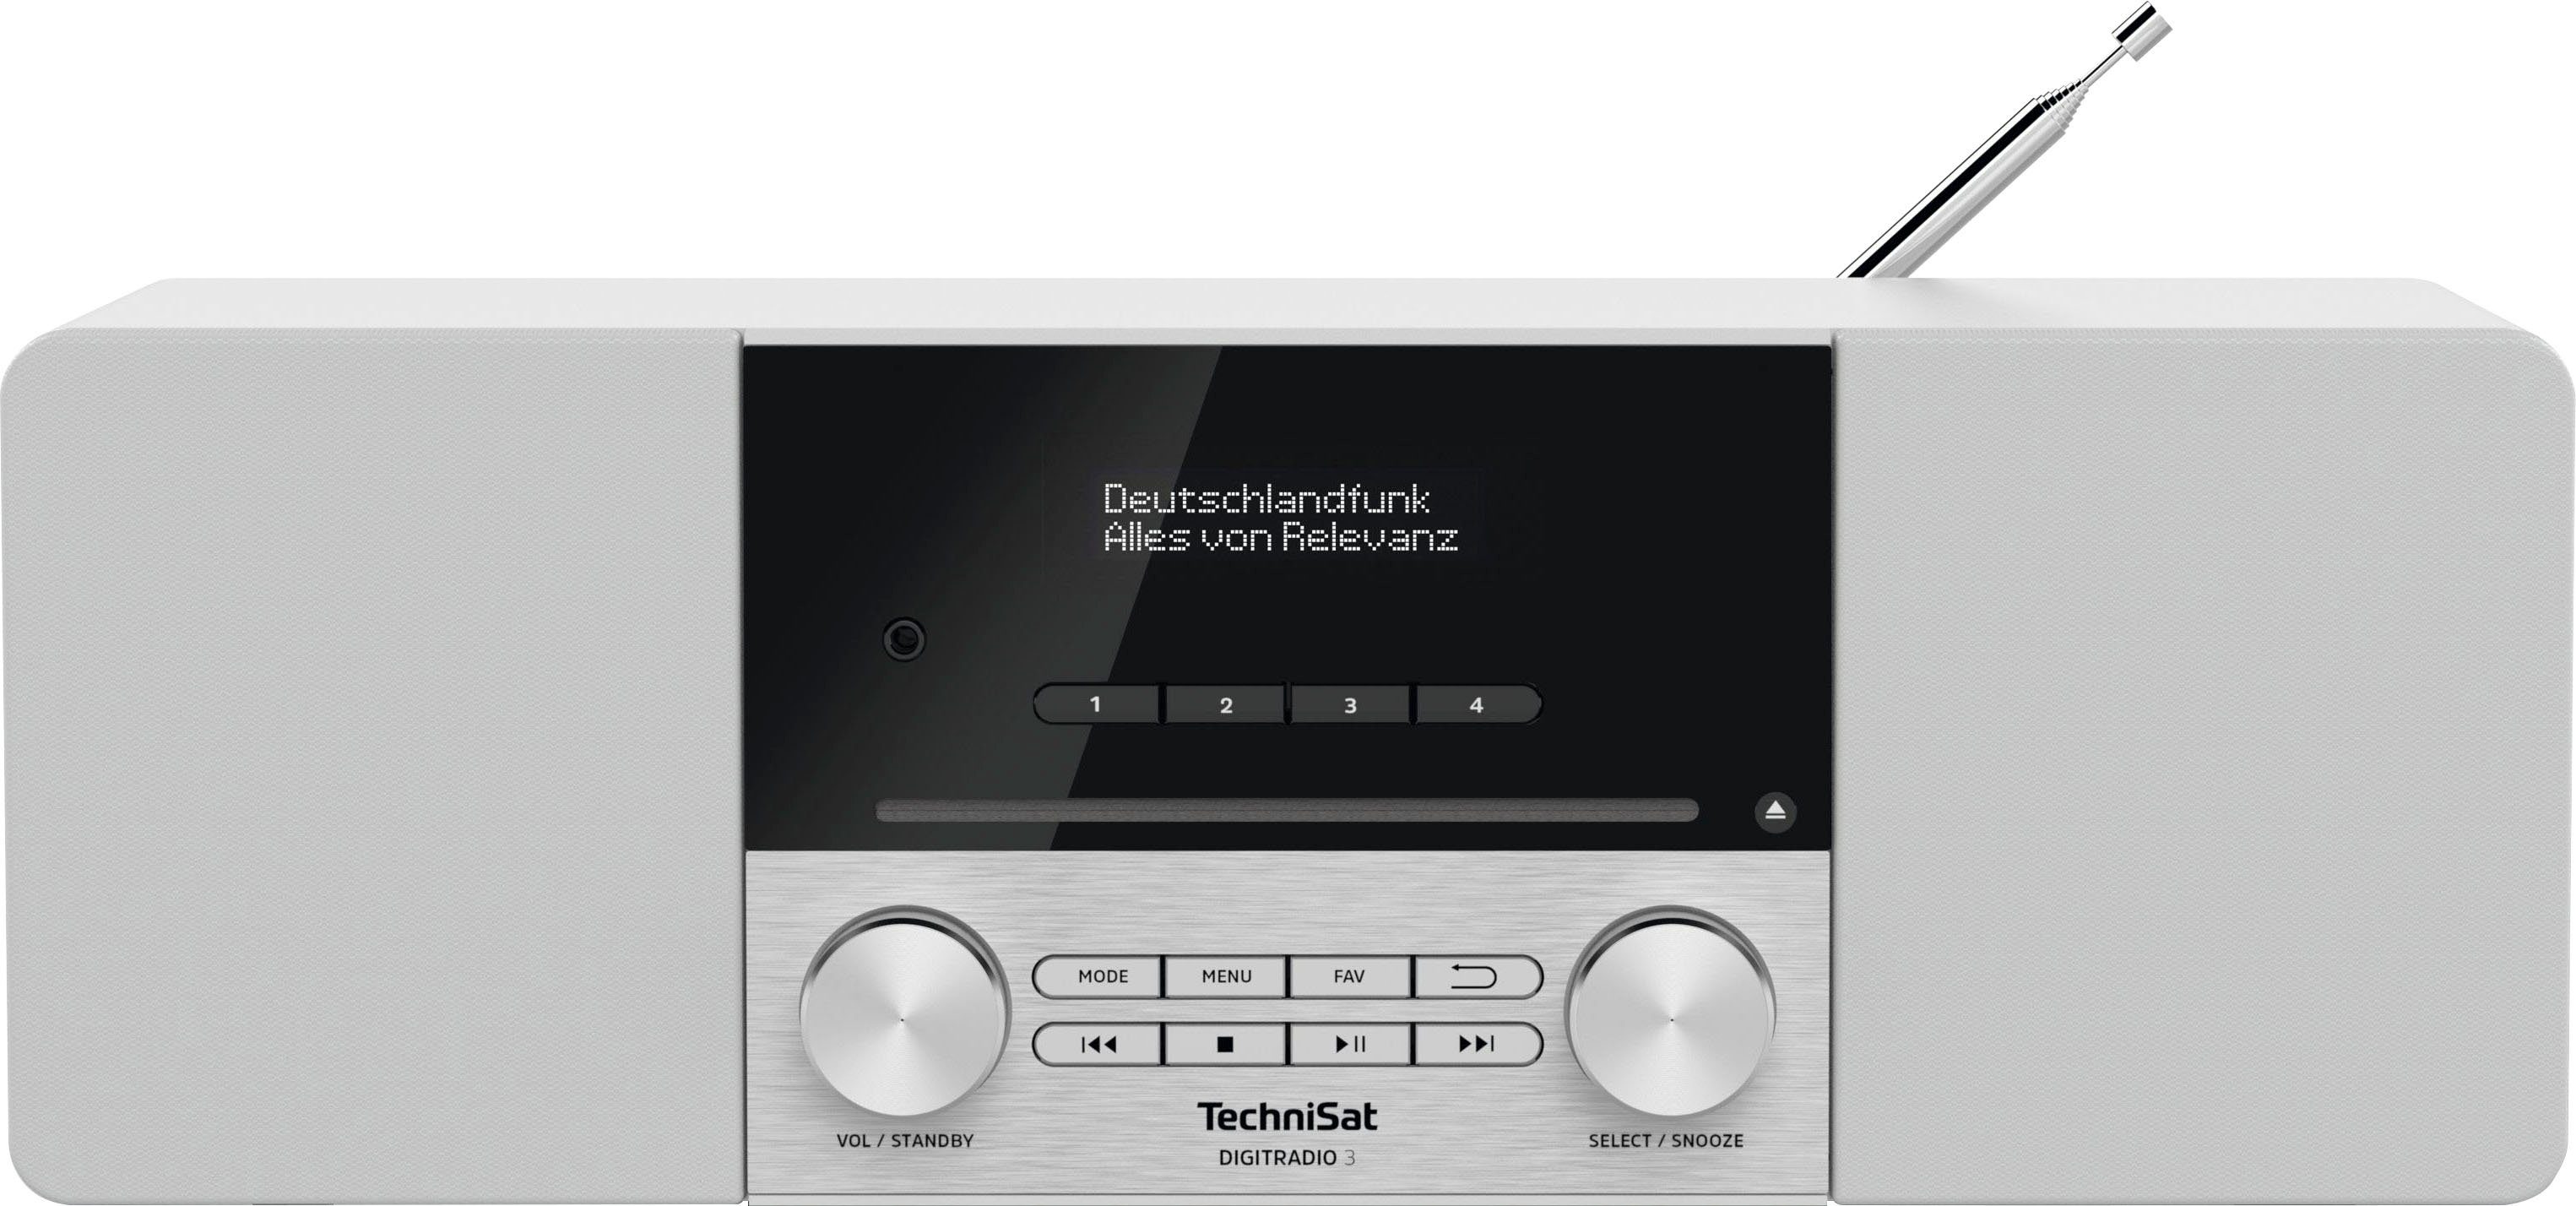 weiß Digitalradio DIGITRADIO UKW Germany) mit 20 (Digitalradio W, CD-Player, TechniSat (DAB), 3 Made RDS, (DAB) in